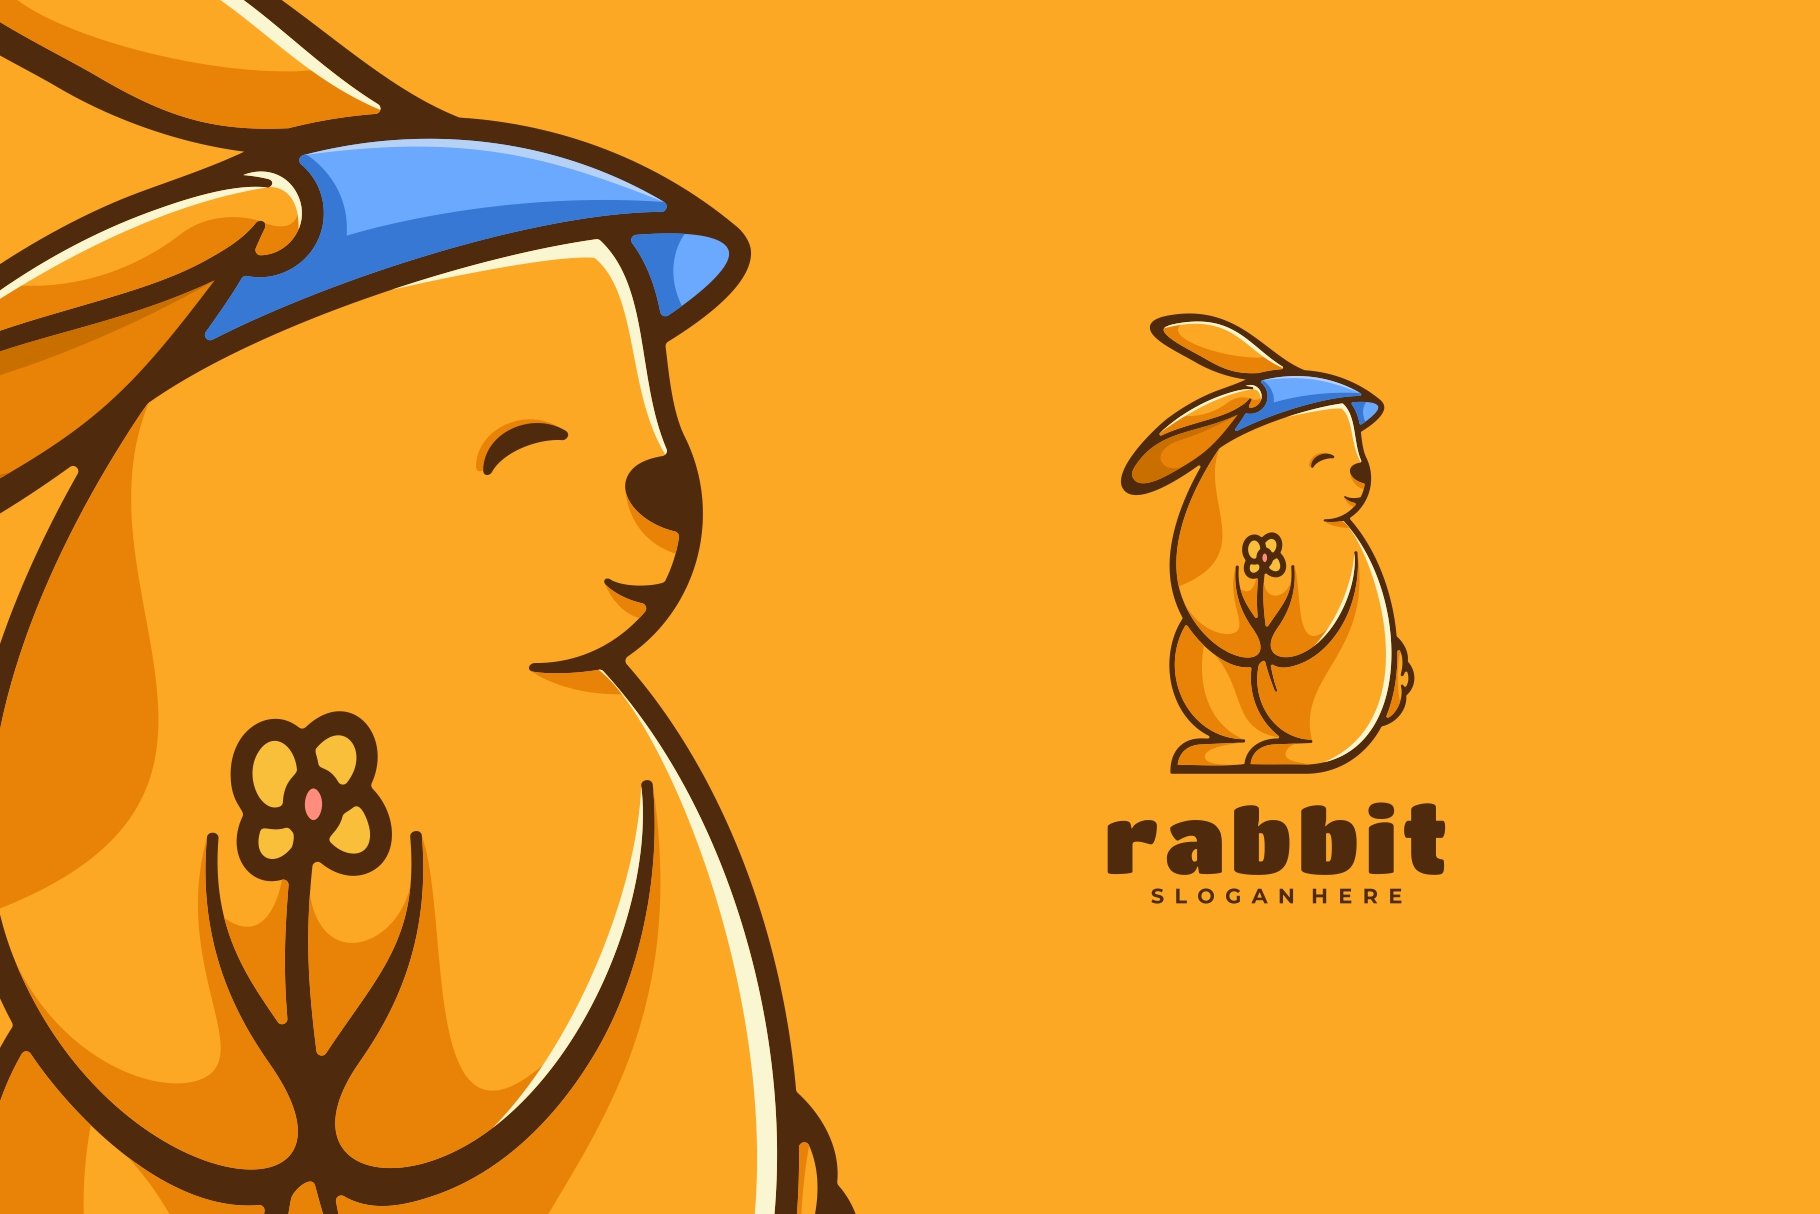 Rabbit Simple Mascot Logo cover image.